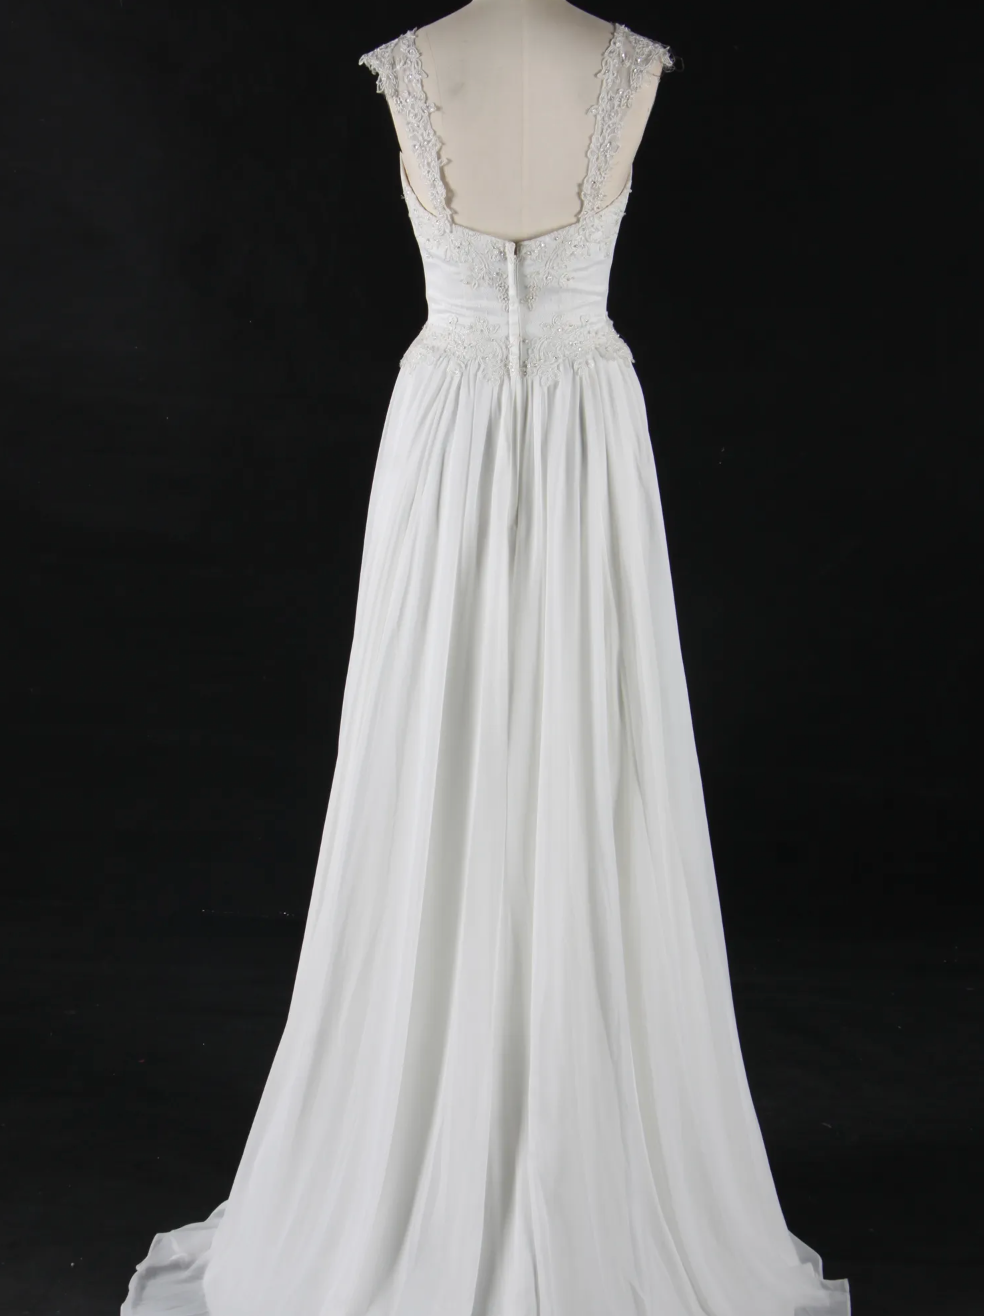 Stunning V Neckline Chiffon Wedding Dress With Beaded Appliques